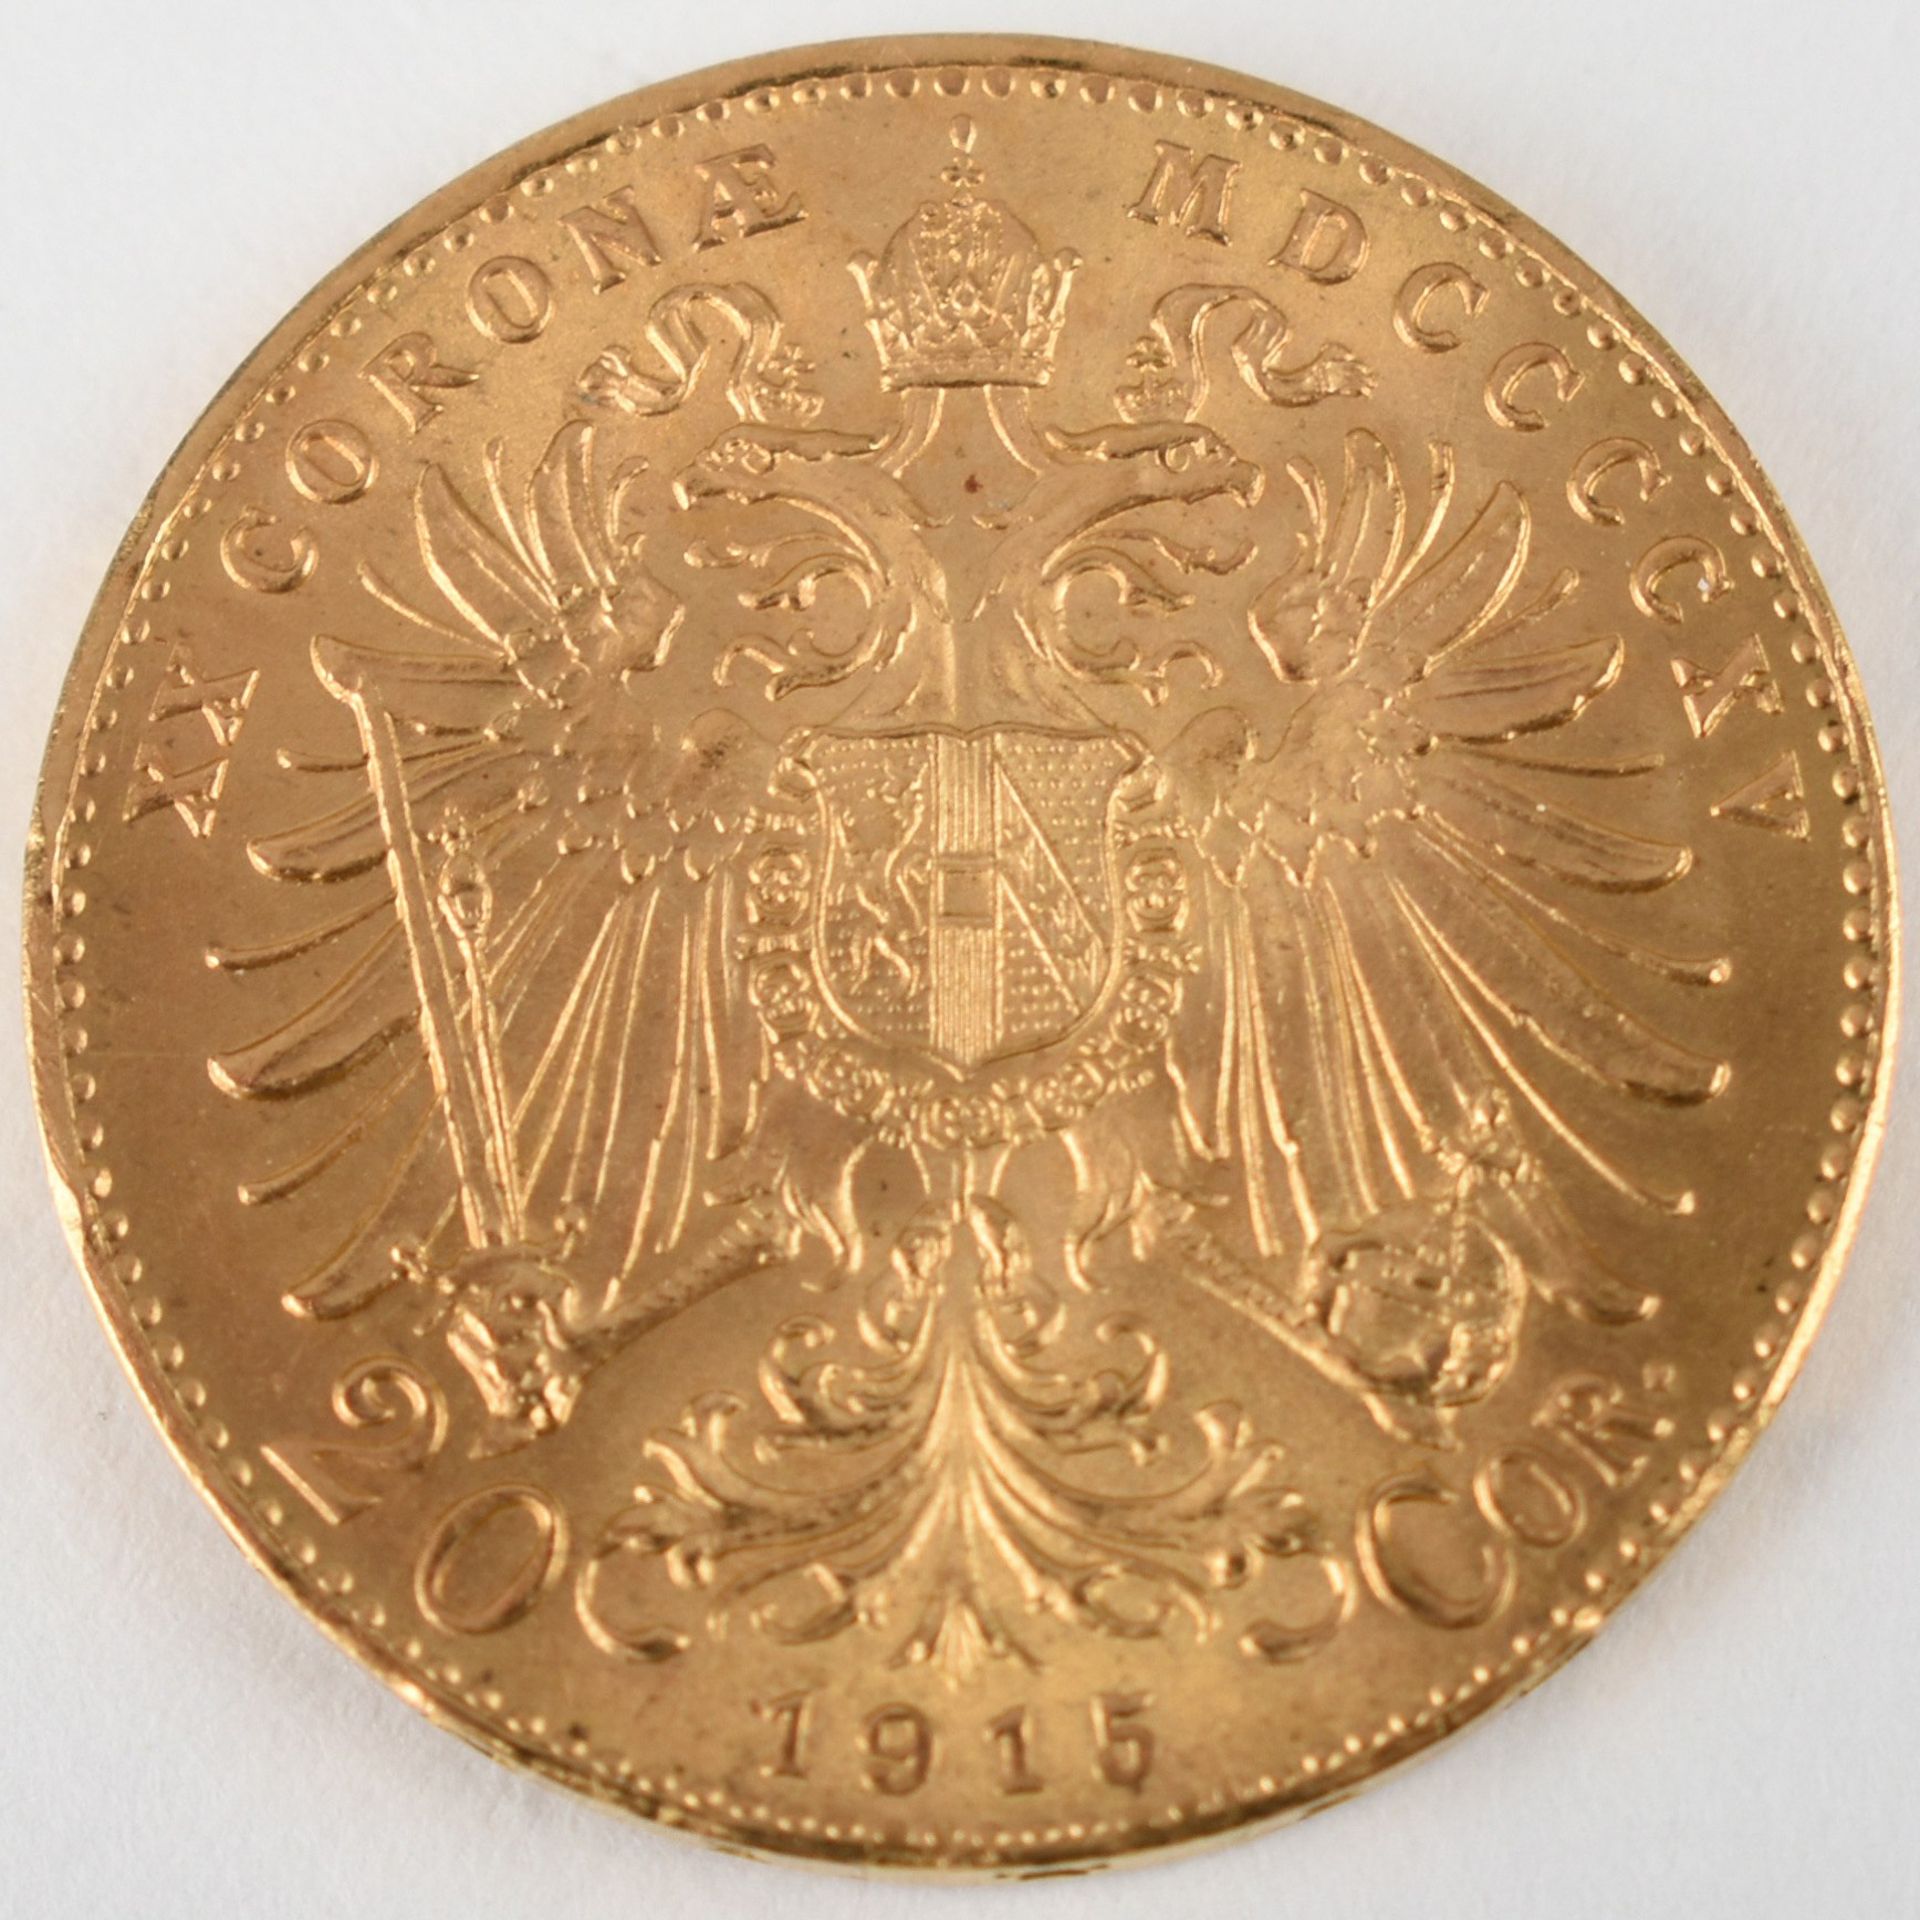 Goldmünze Österreich 1915 20 Kronen in Gold, 900/1000, 6,775 g, D ca. 21,1 mm, av. Kaiser Franz - Image 3 of 3